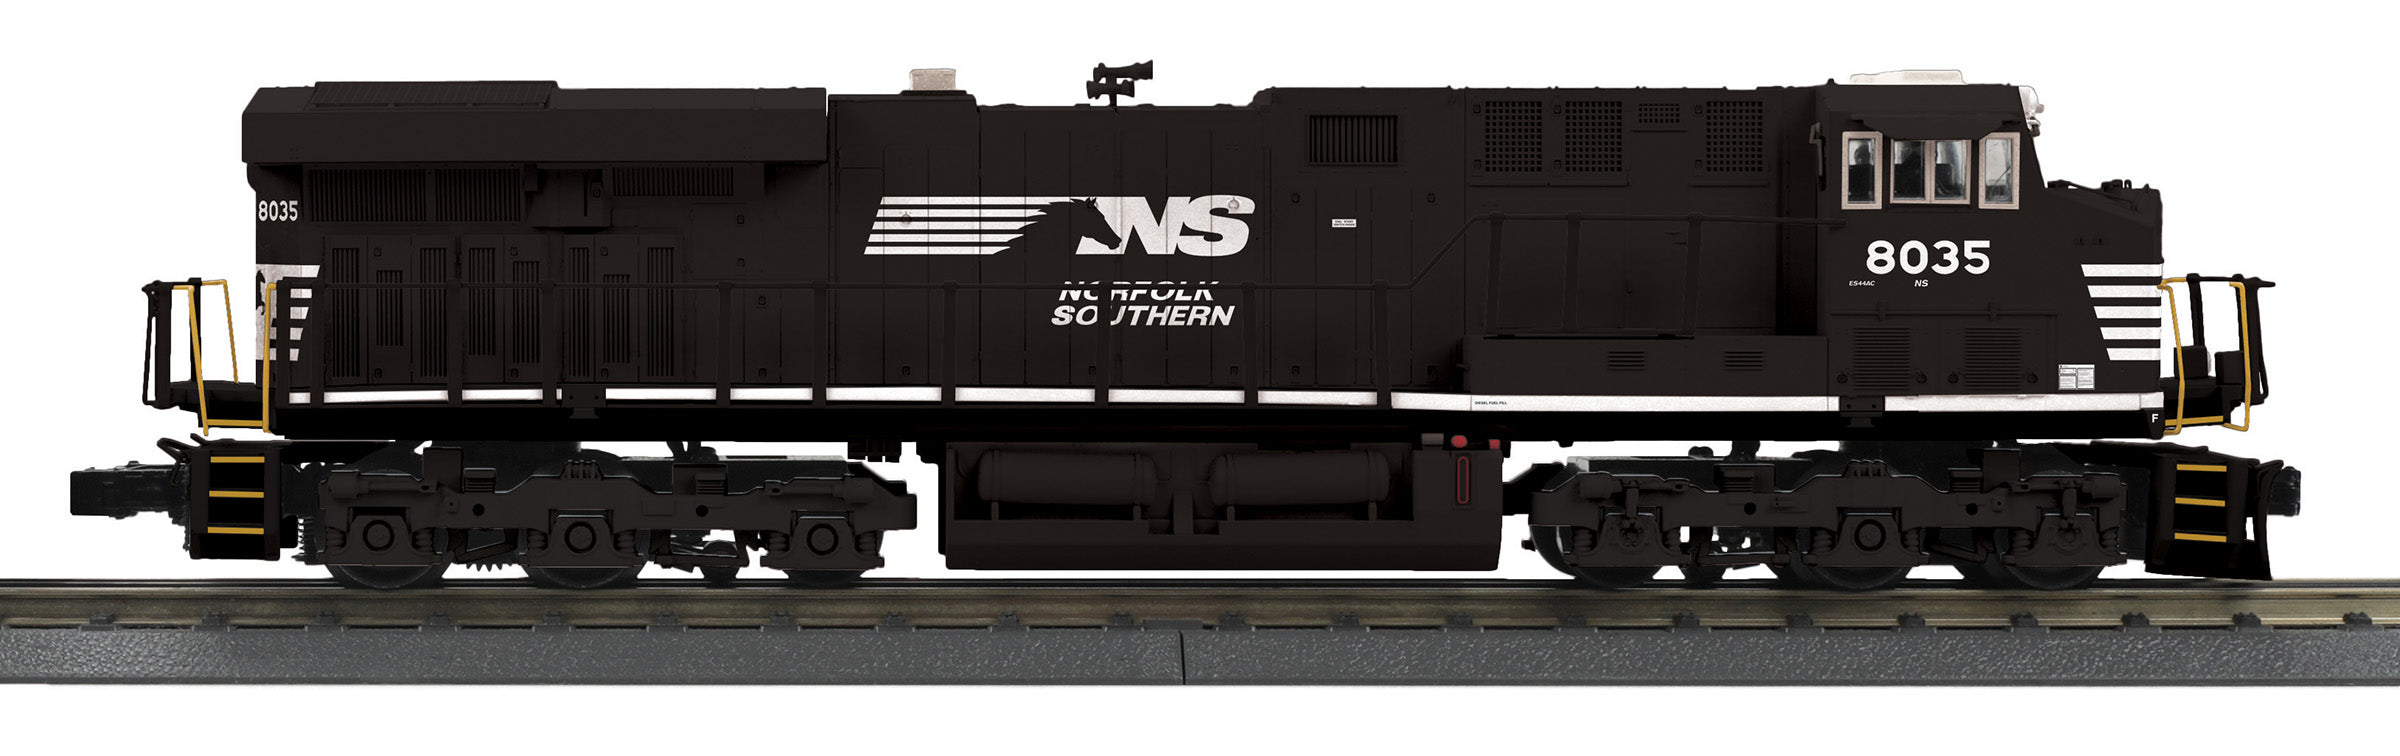 MTH 30-21159-1 - ES44AC Imperial Diesel Engine "Norfolk Southern" #8035 w/ PS3